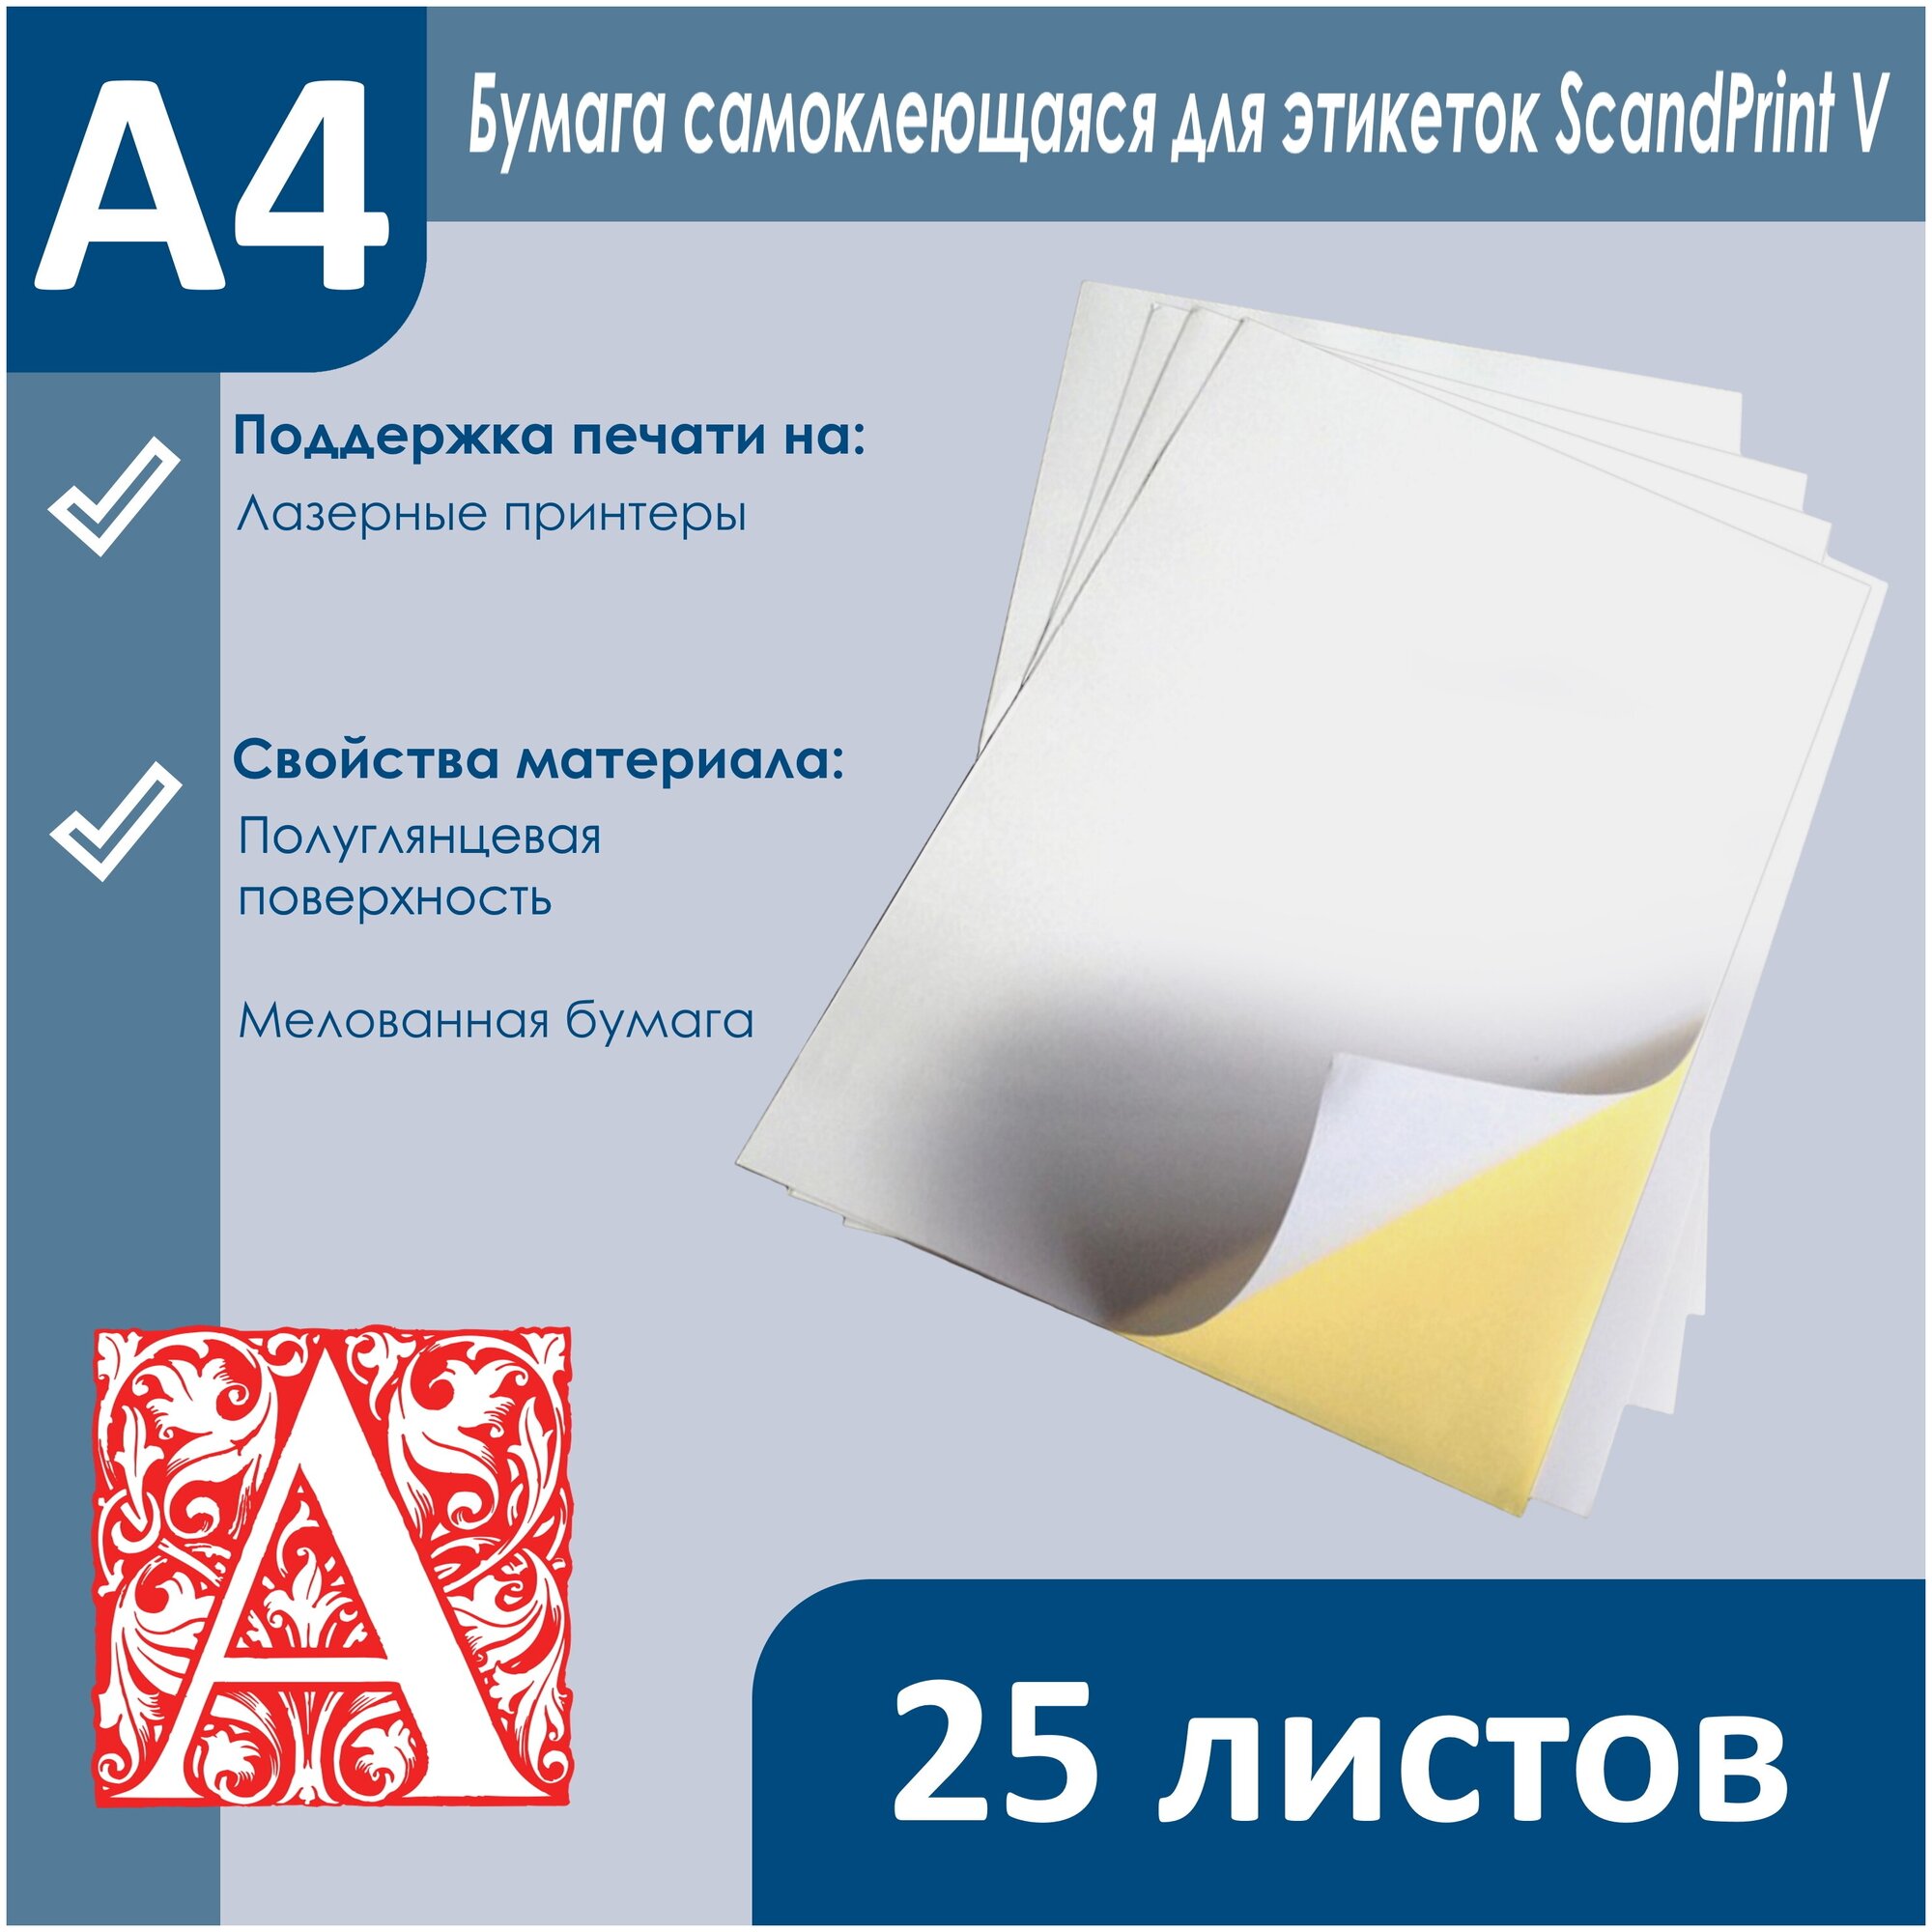 Бумага самоклеящаяся для этикеток ScandPrint V размер А4 25 листов